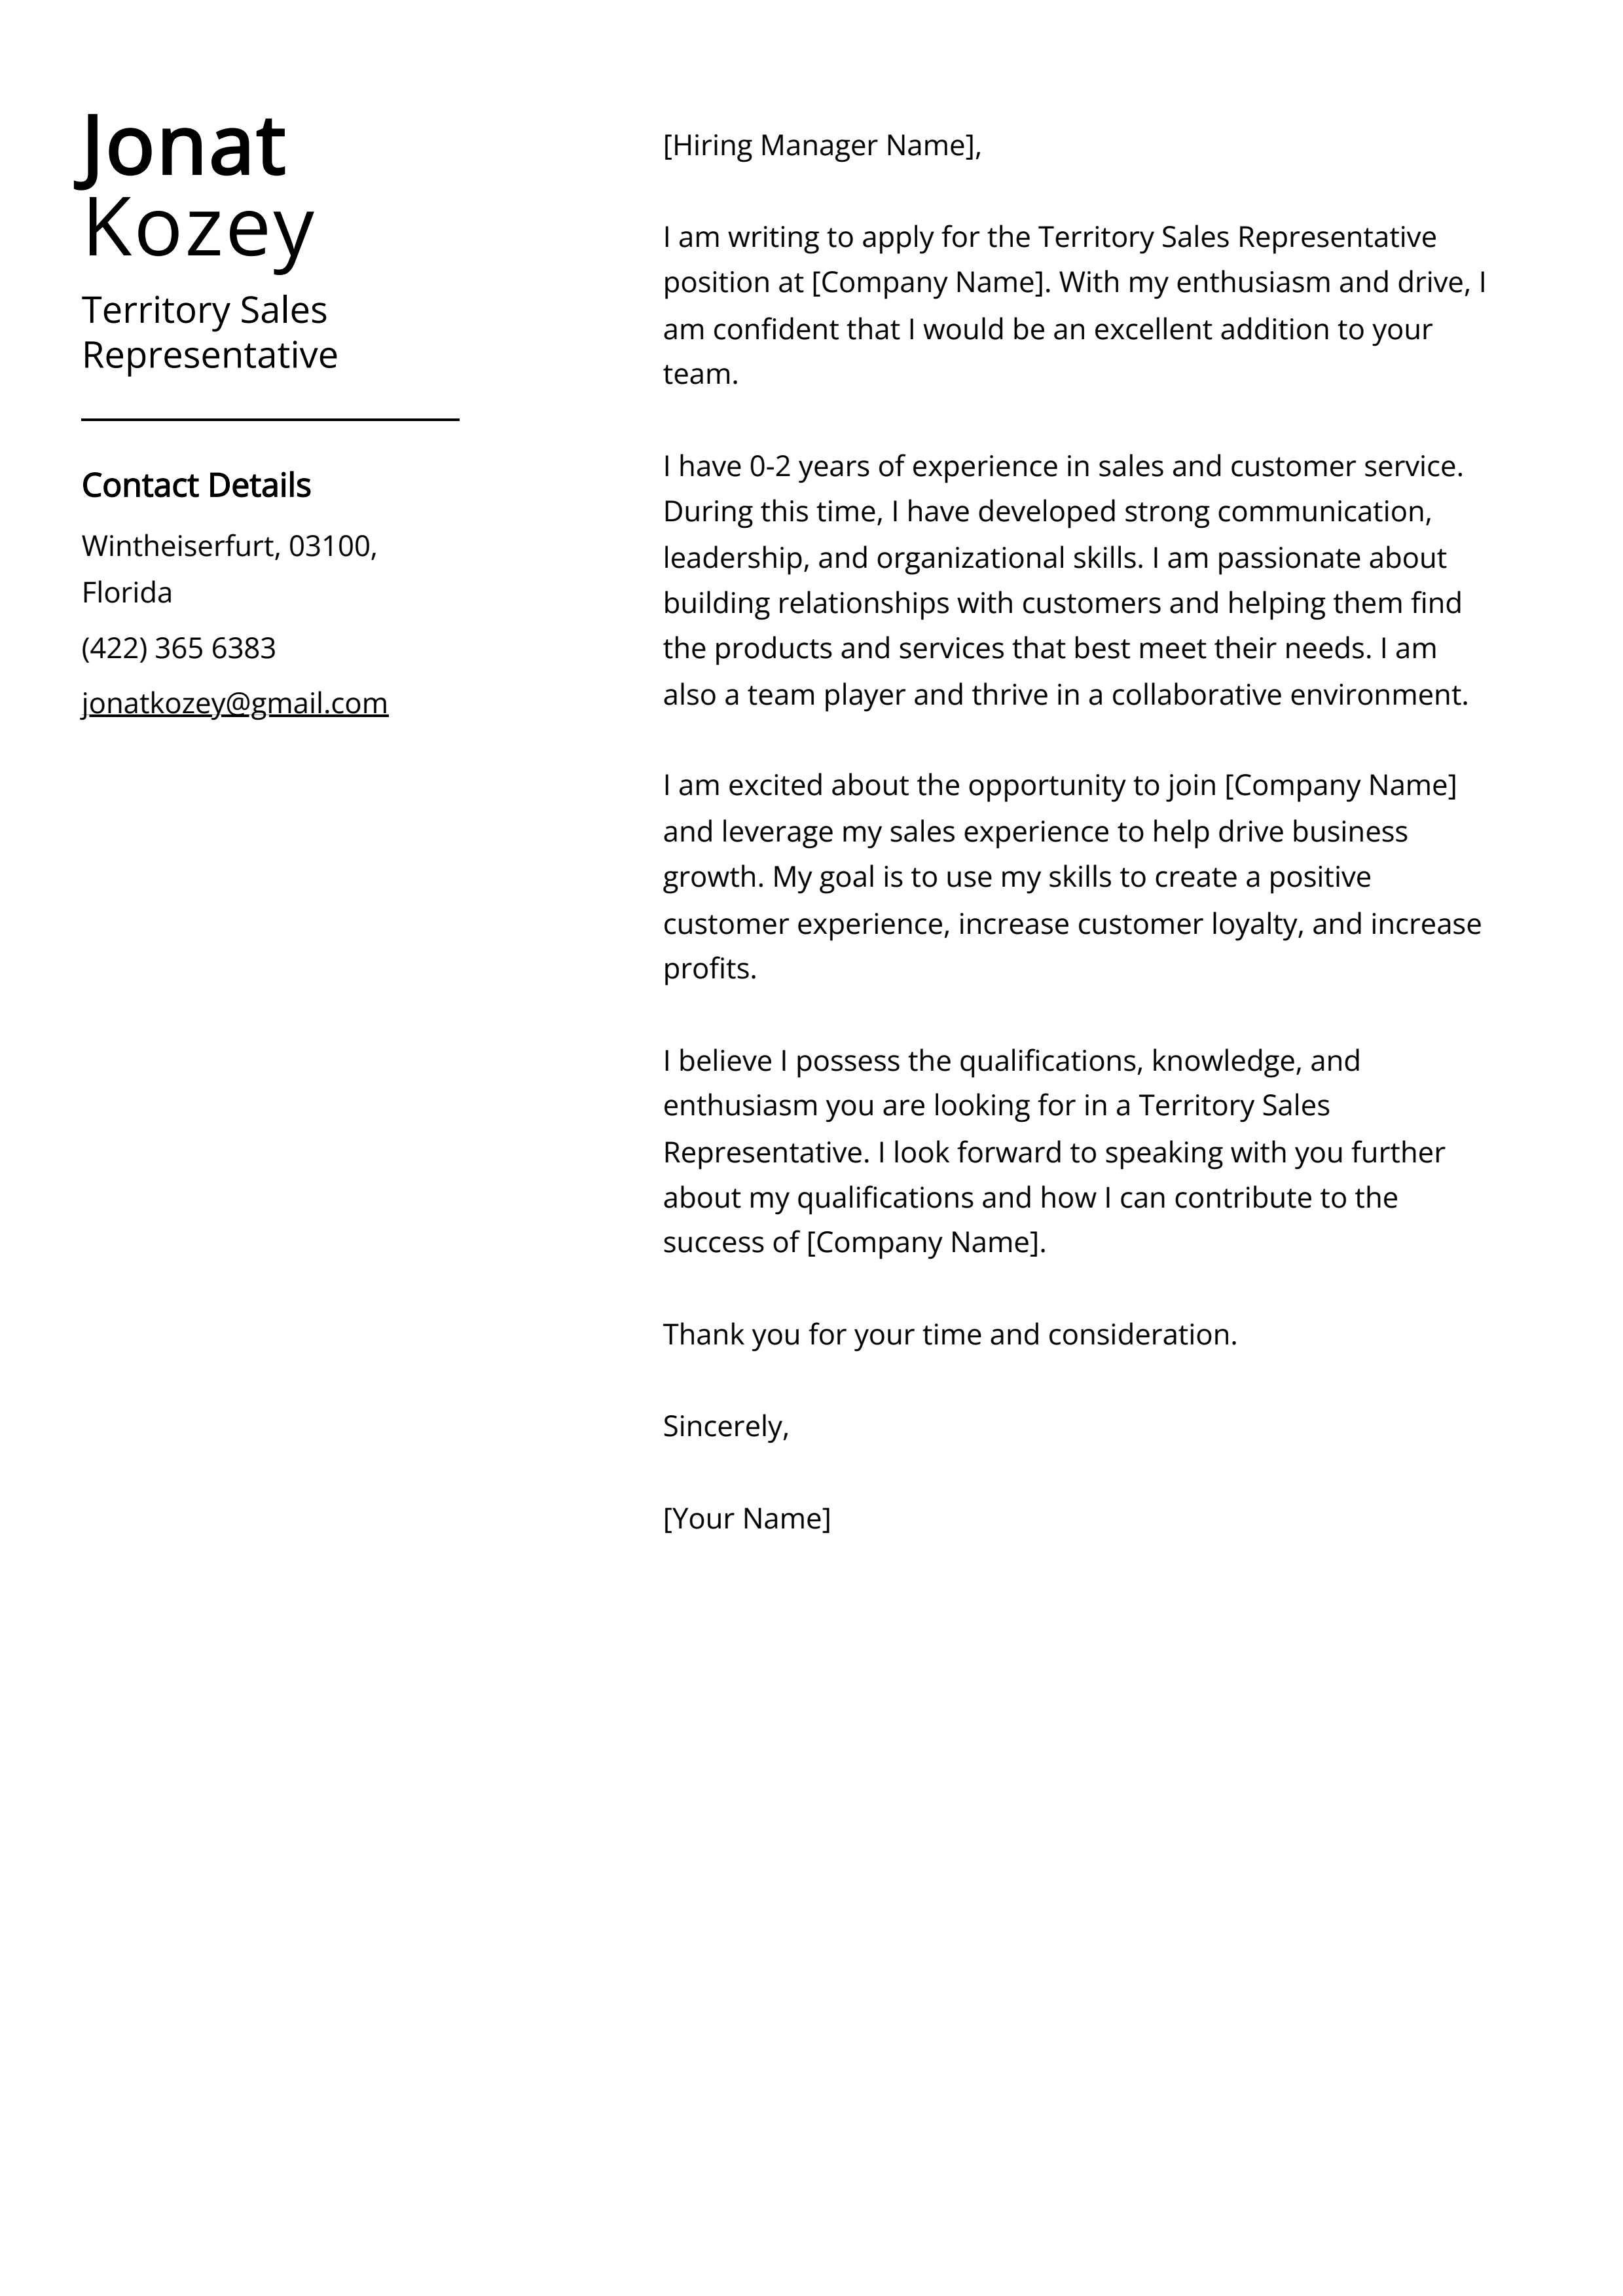 Territory Sales Representative Cover Letter Example